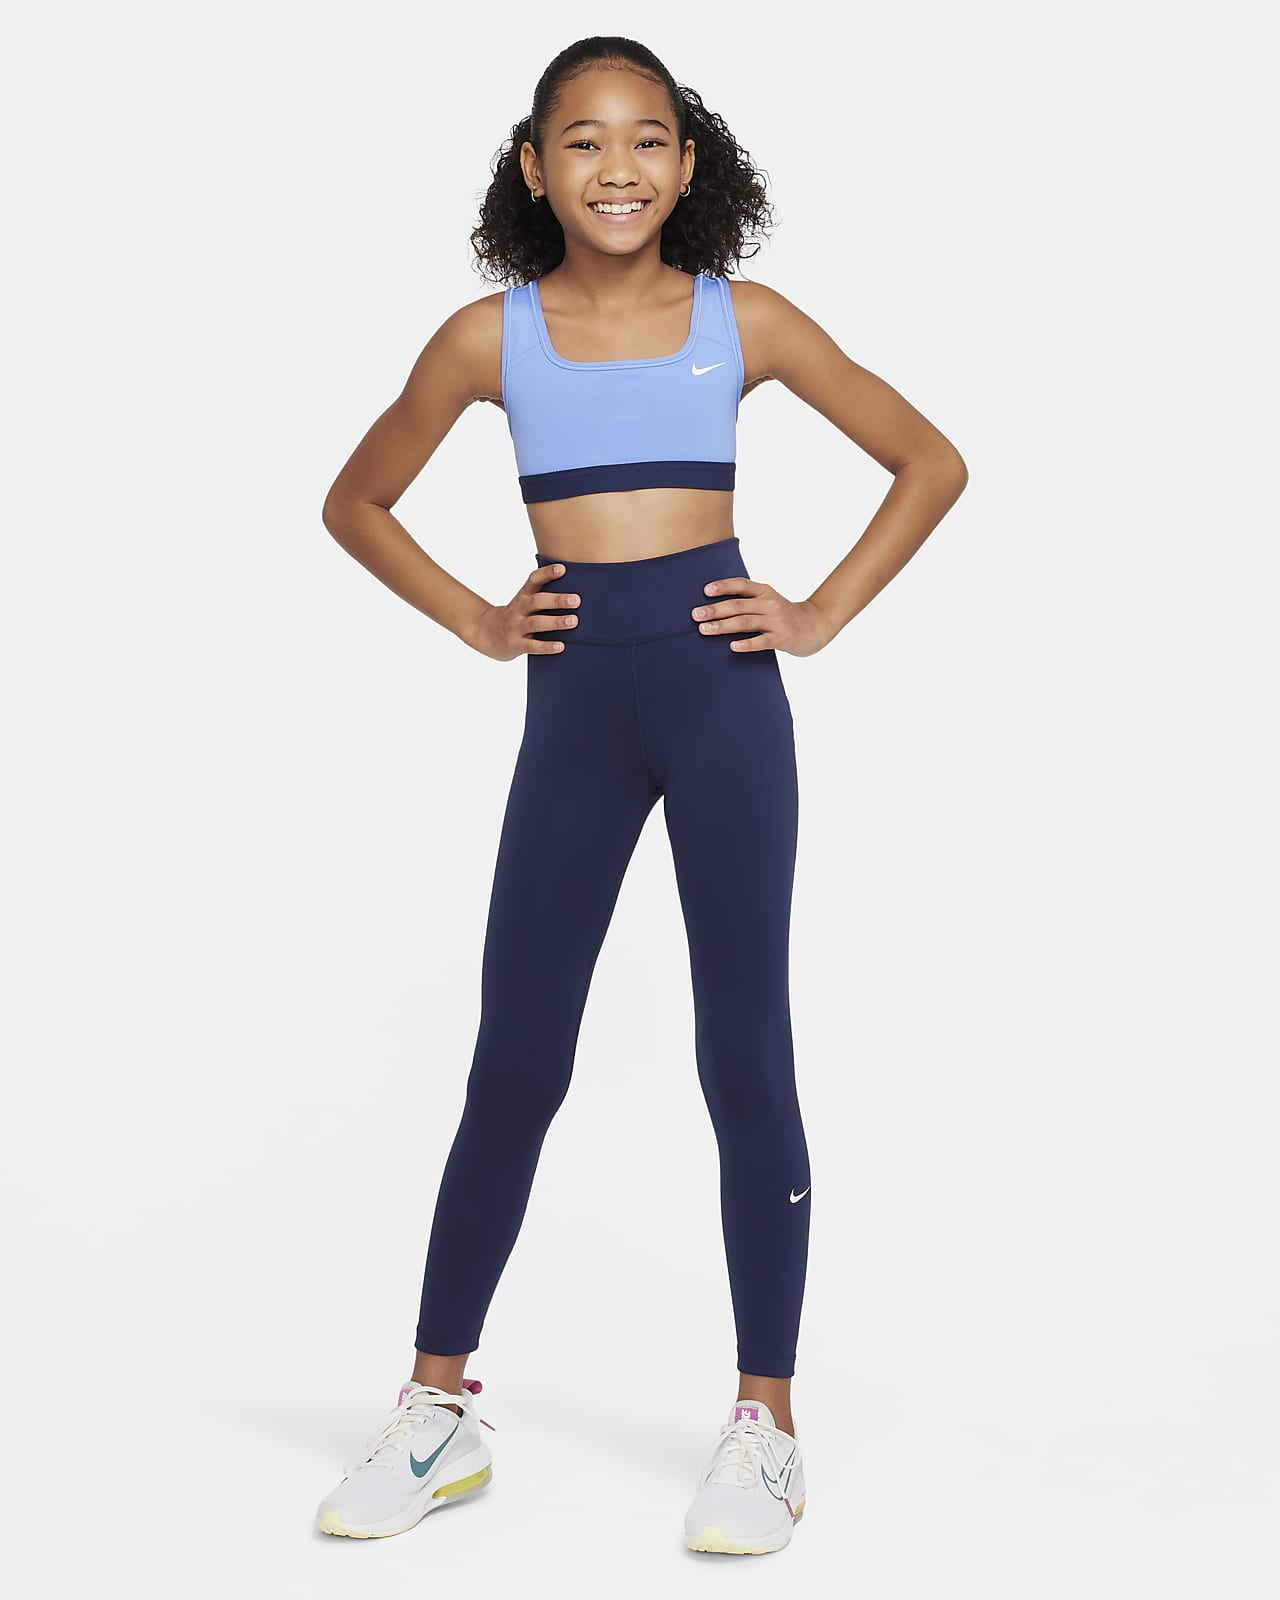 Nike Girls' Dri-FIT One Leggings, Kids', High Waisted, Athletic, Training